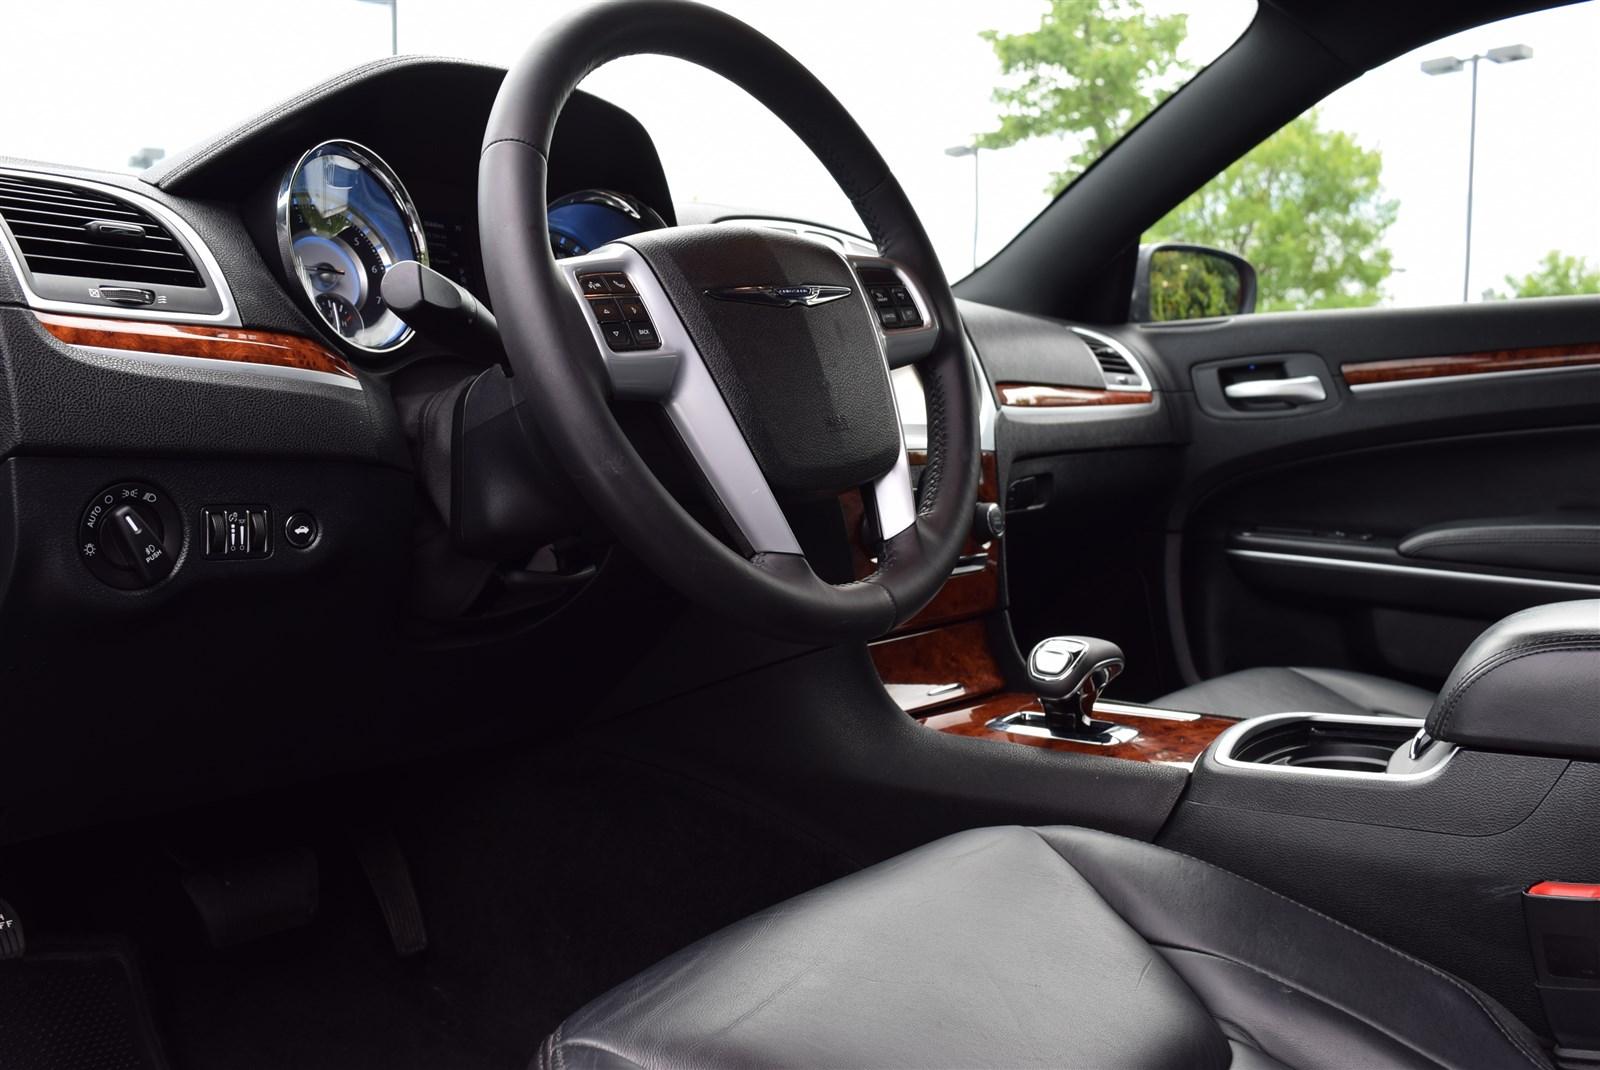 Used 2014 Chrysler 300 Uptown Edition for sale Sold at Gravity Autos Marietta in Marietta GA 30060 13